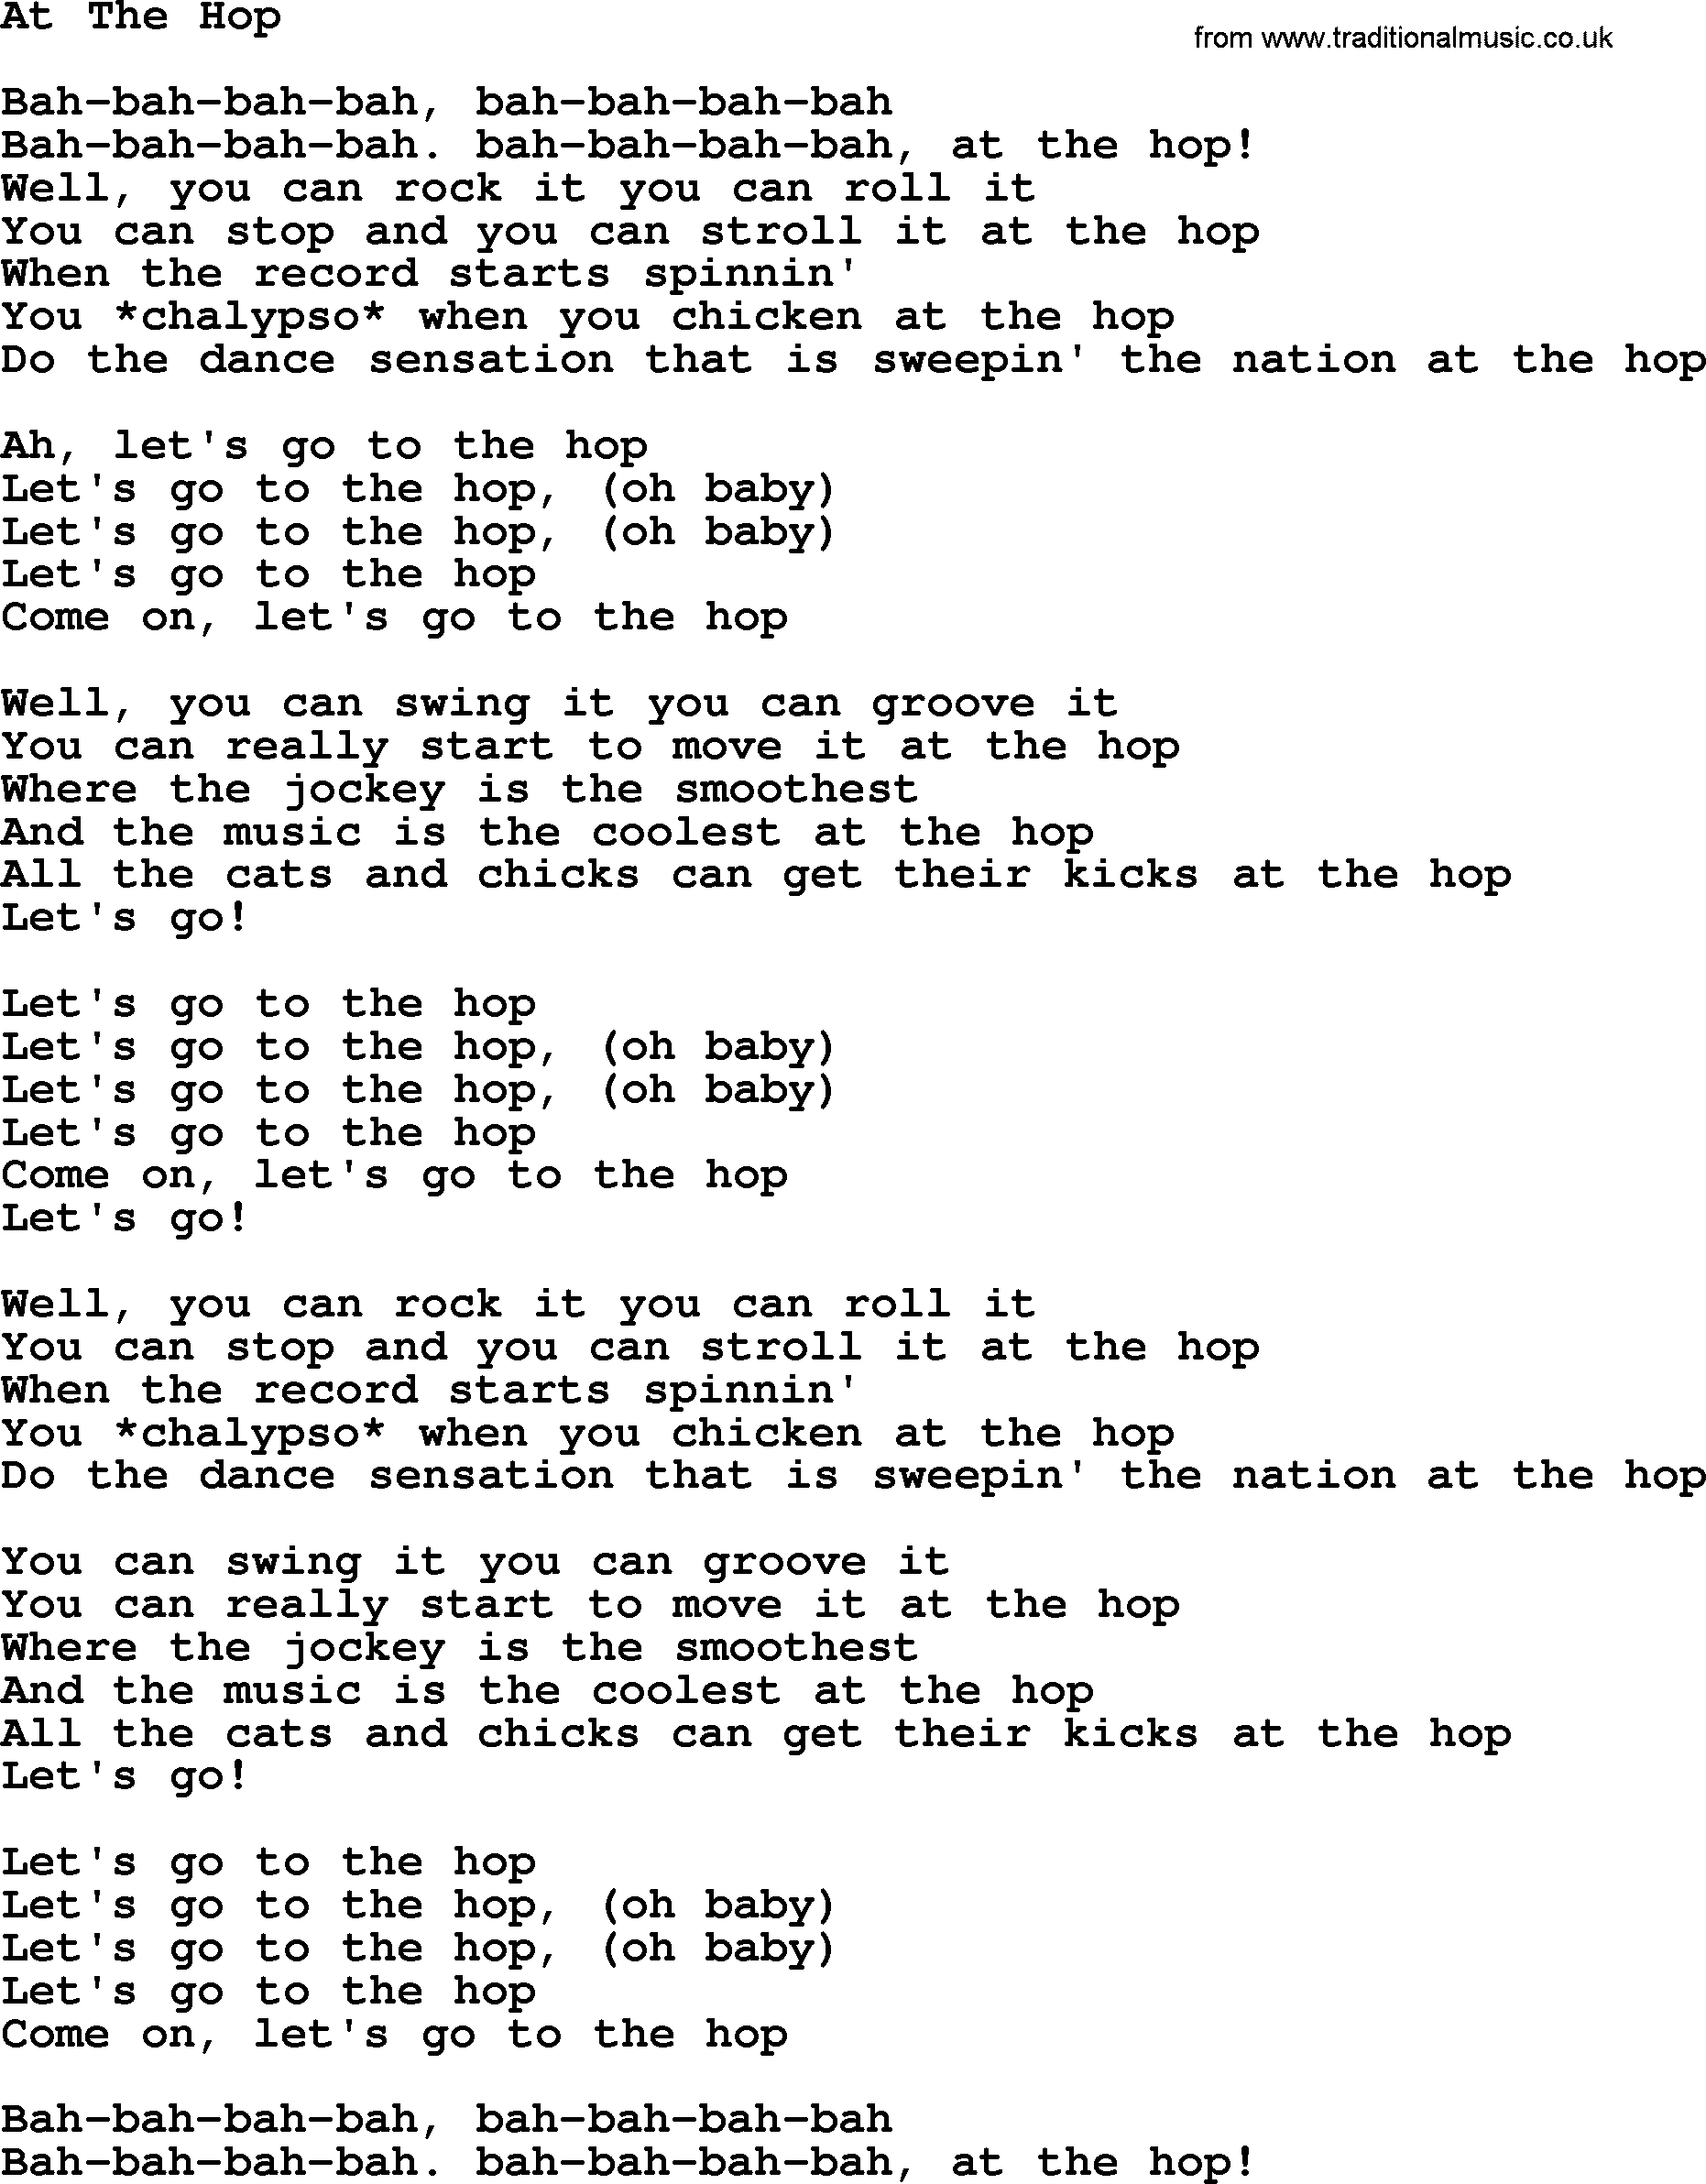 The Byrds song At The Hop, lyrics